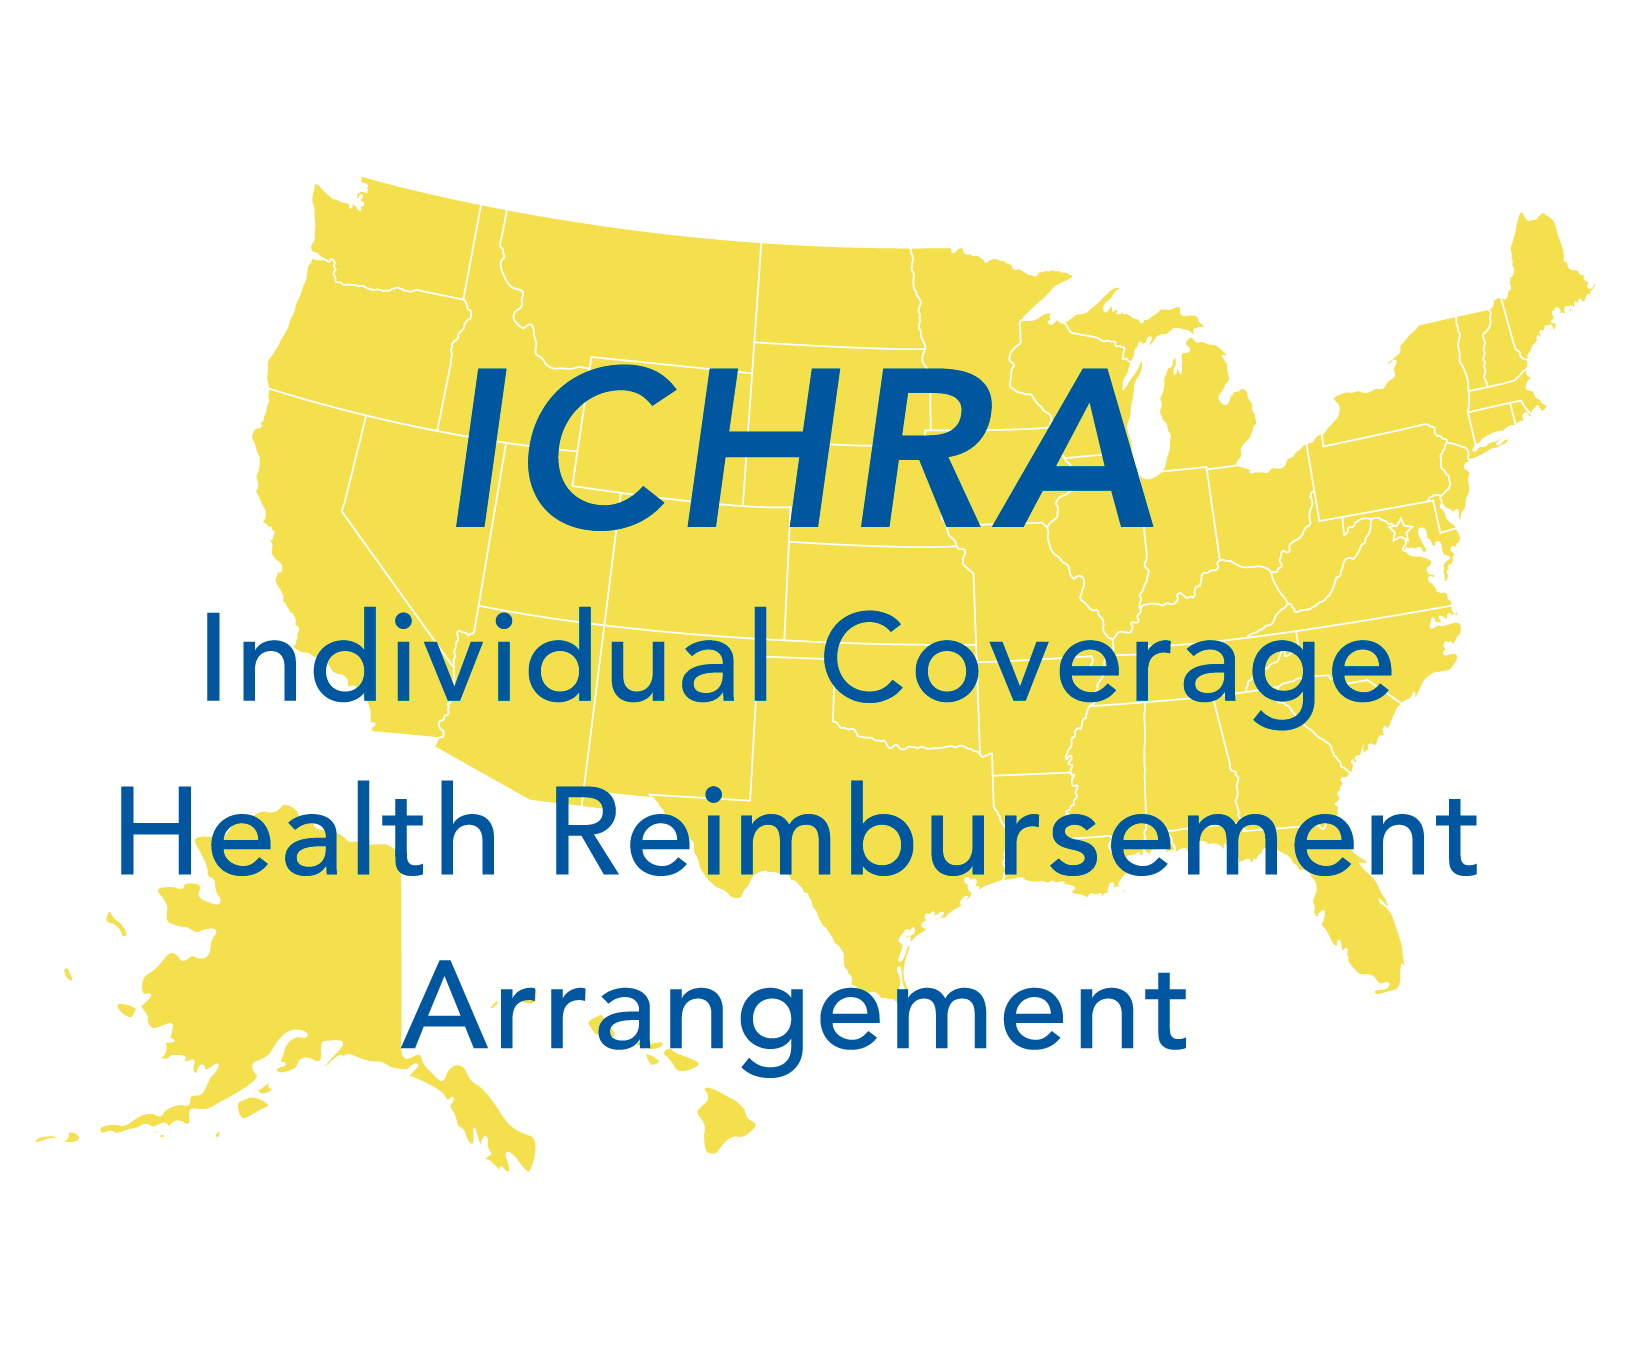 ICHRA Individual Coverage Health Reimbursement Arrangement